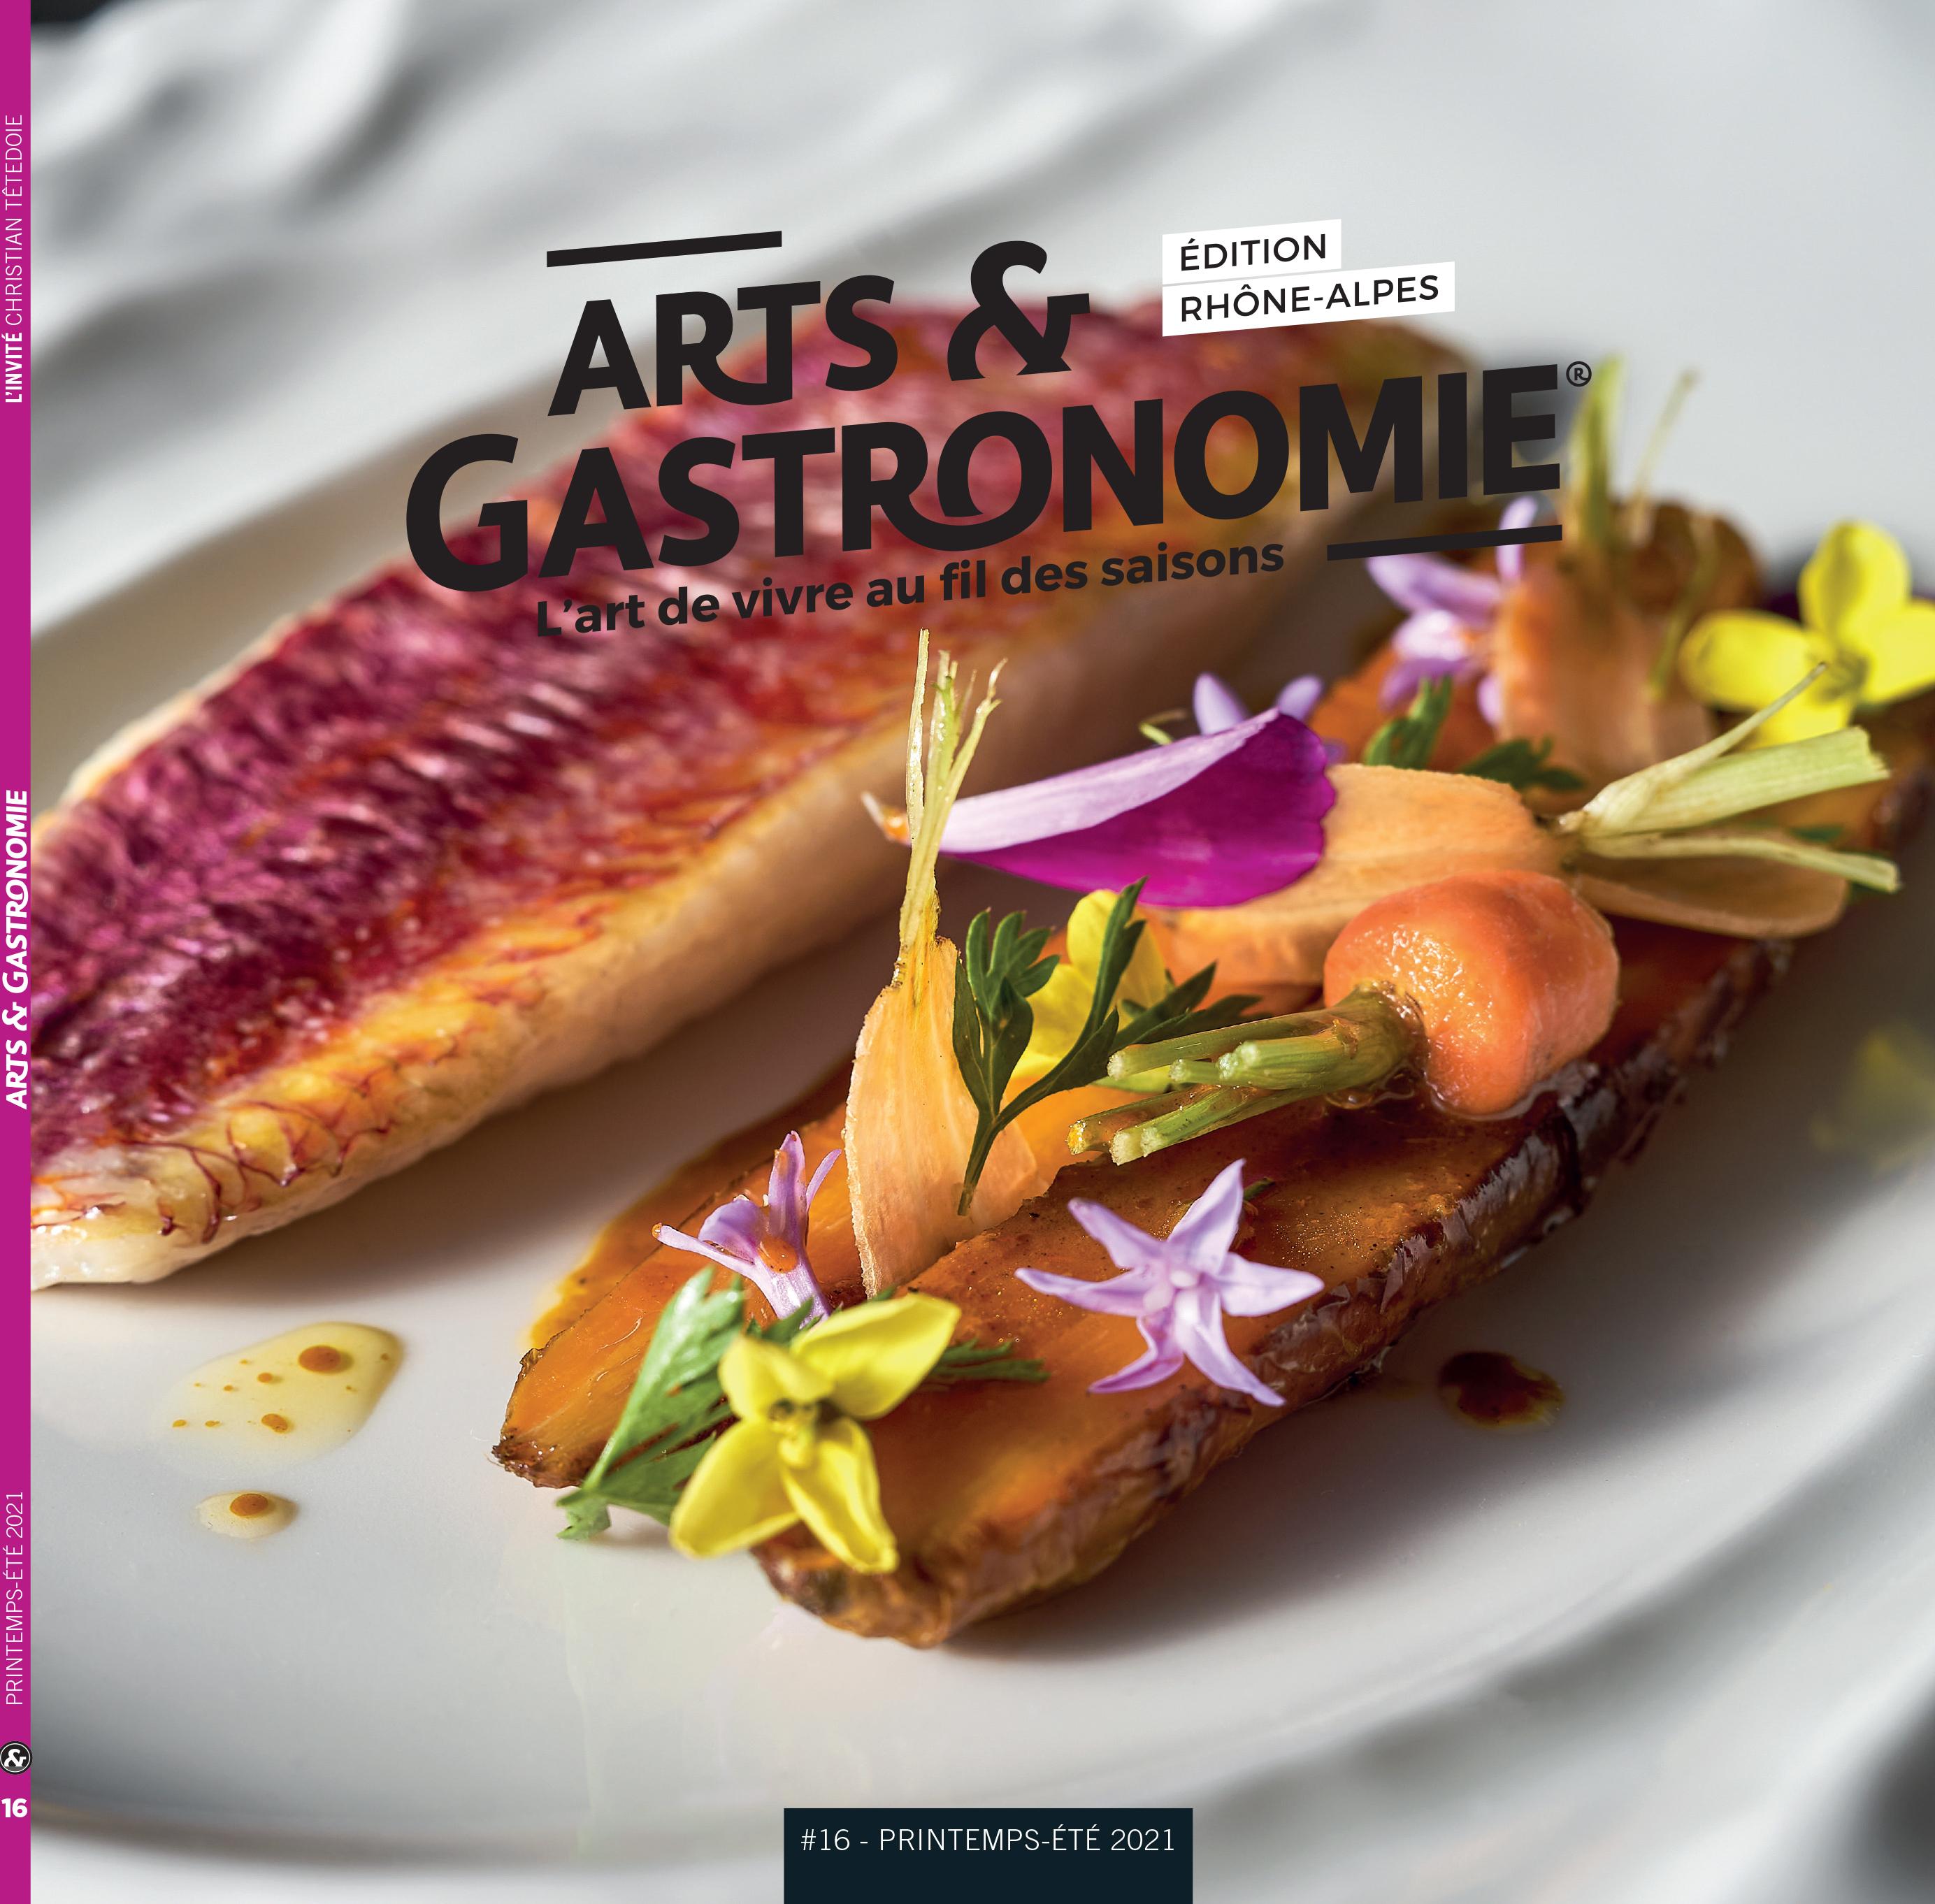 Art & Gastronomie